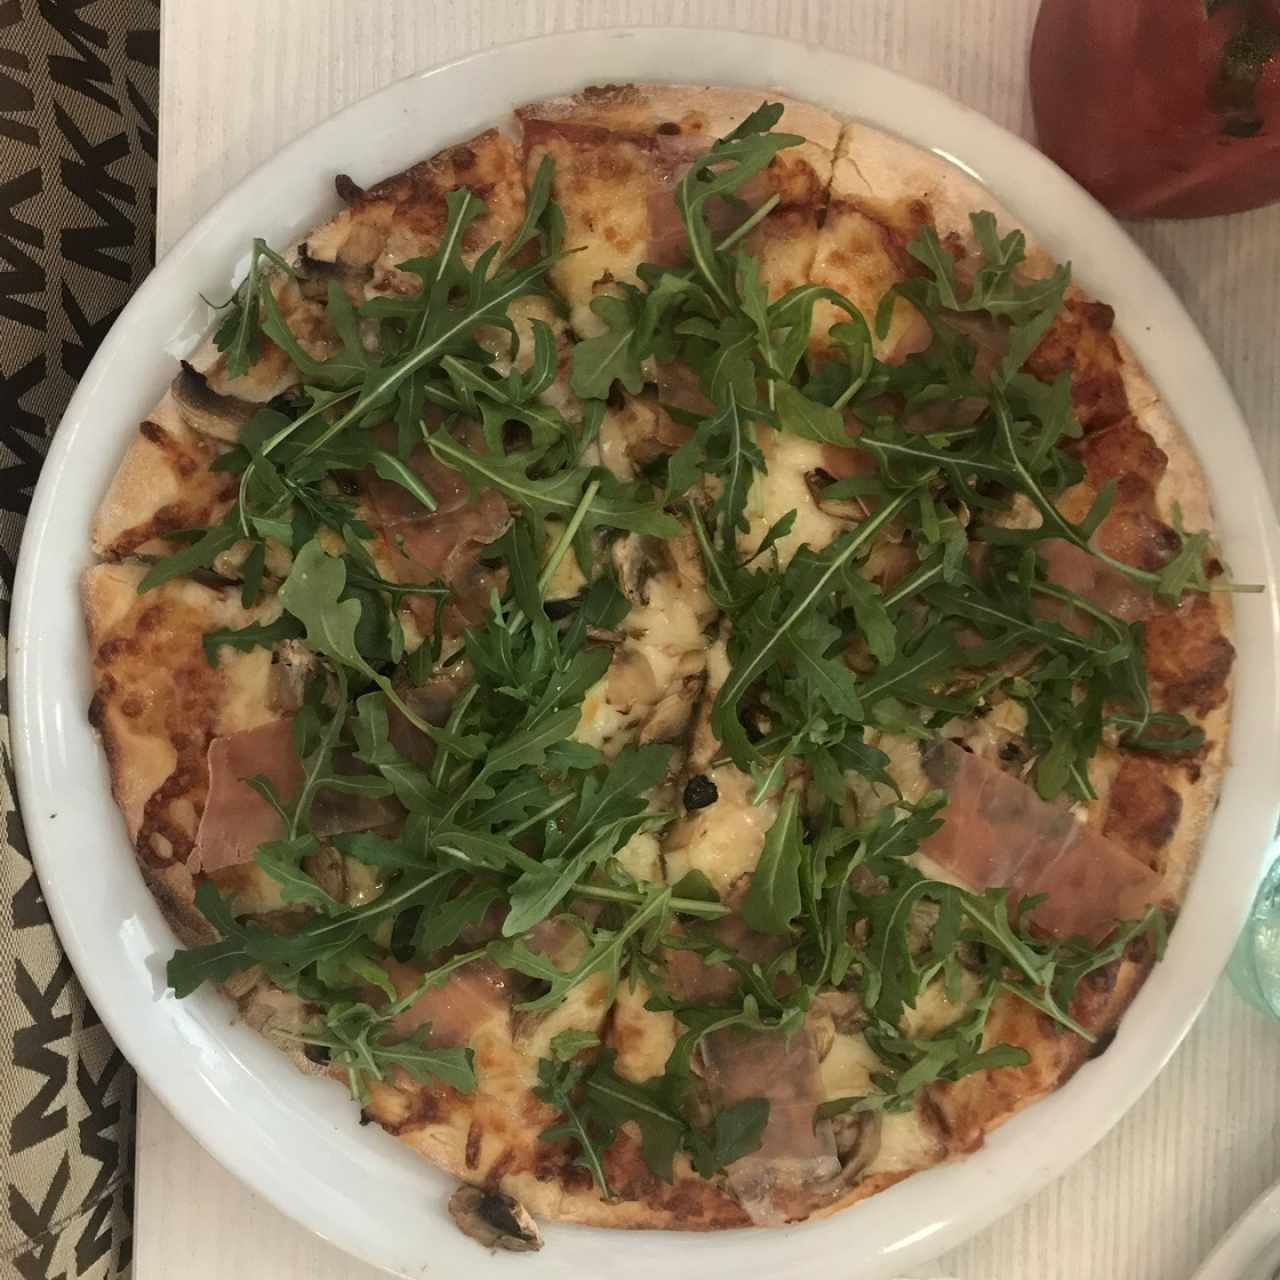 Pizzas Gourmet - Katané